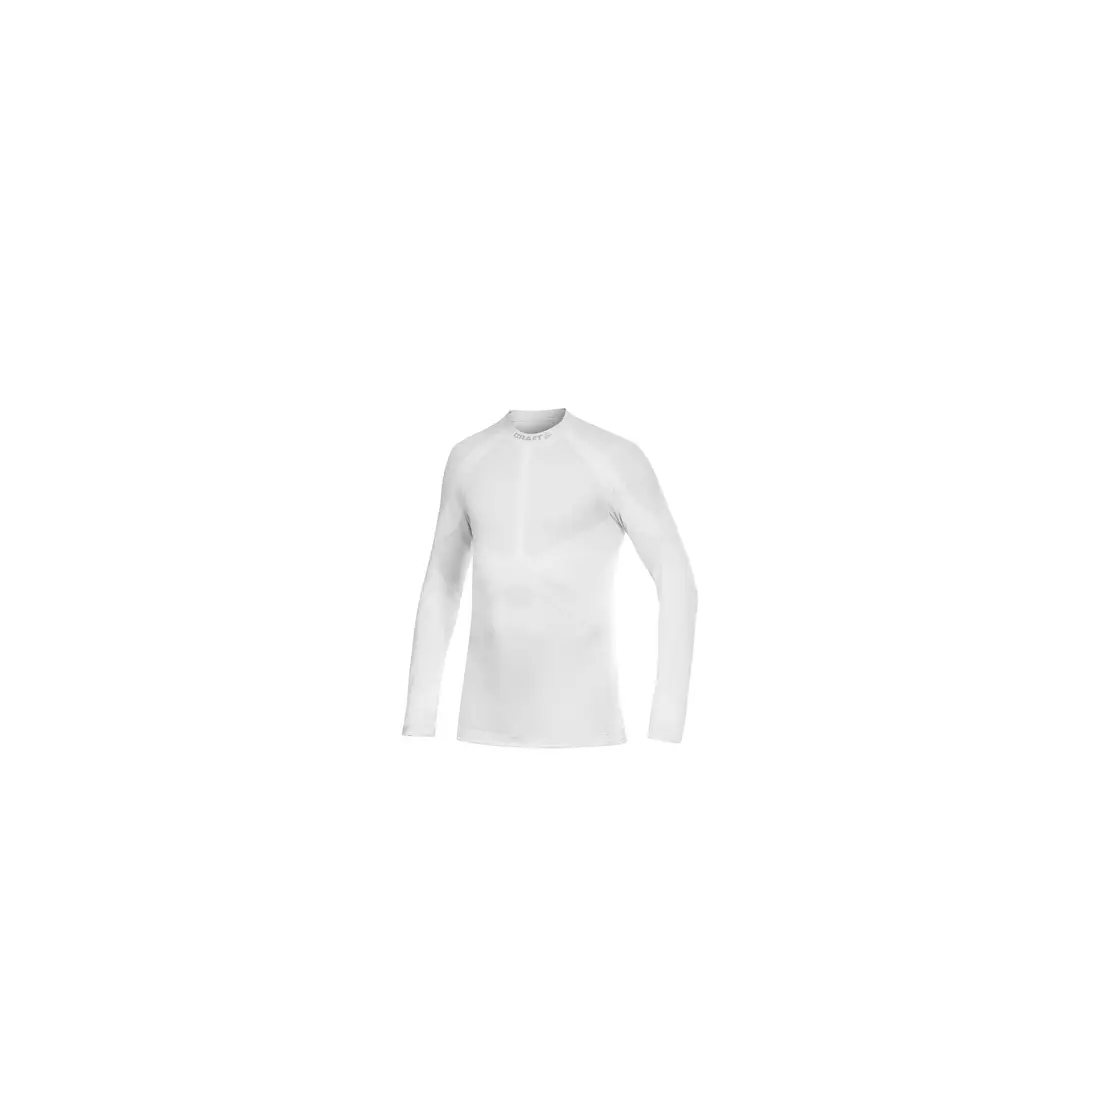 CRAFT WARM - termoprádlo - 1901637-2900 - pánské tričko